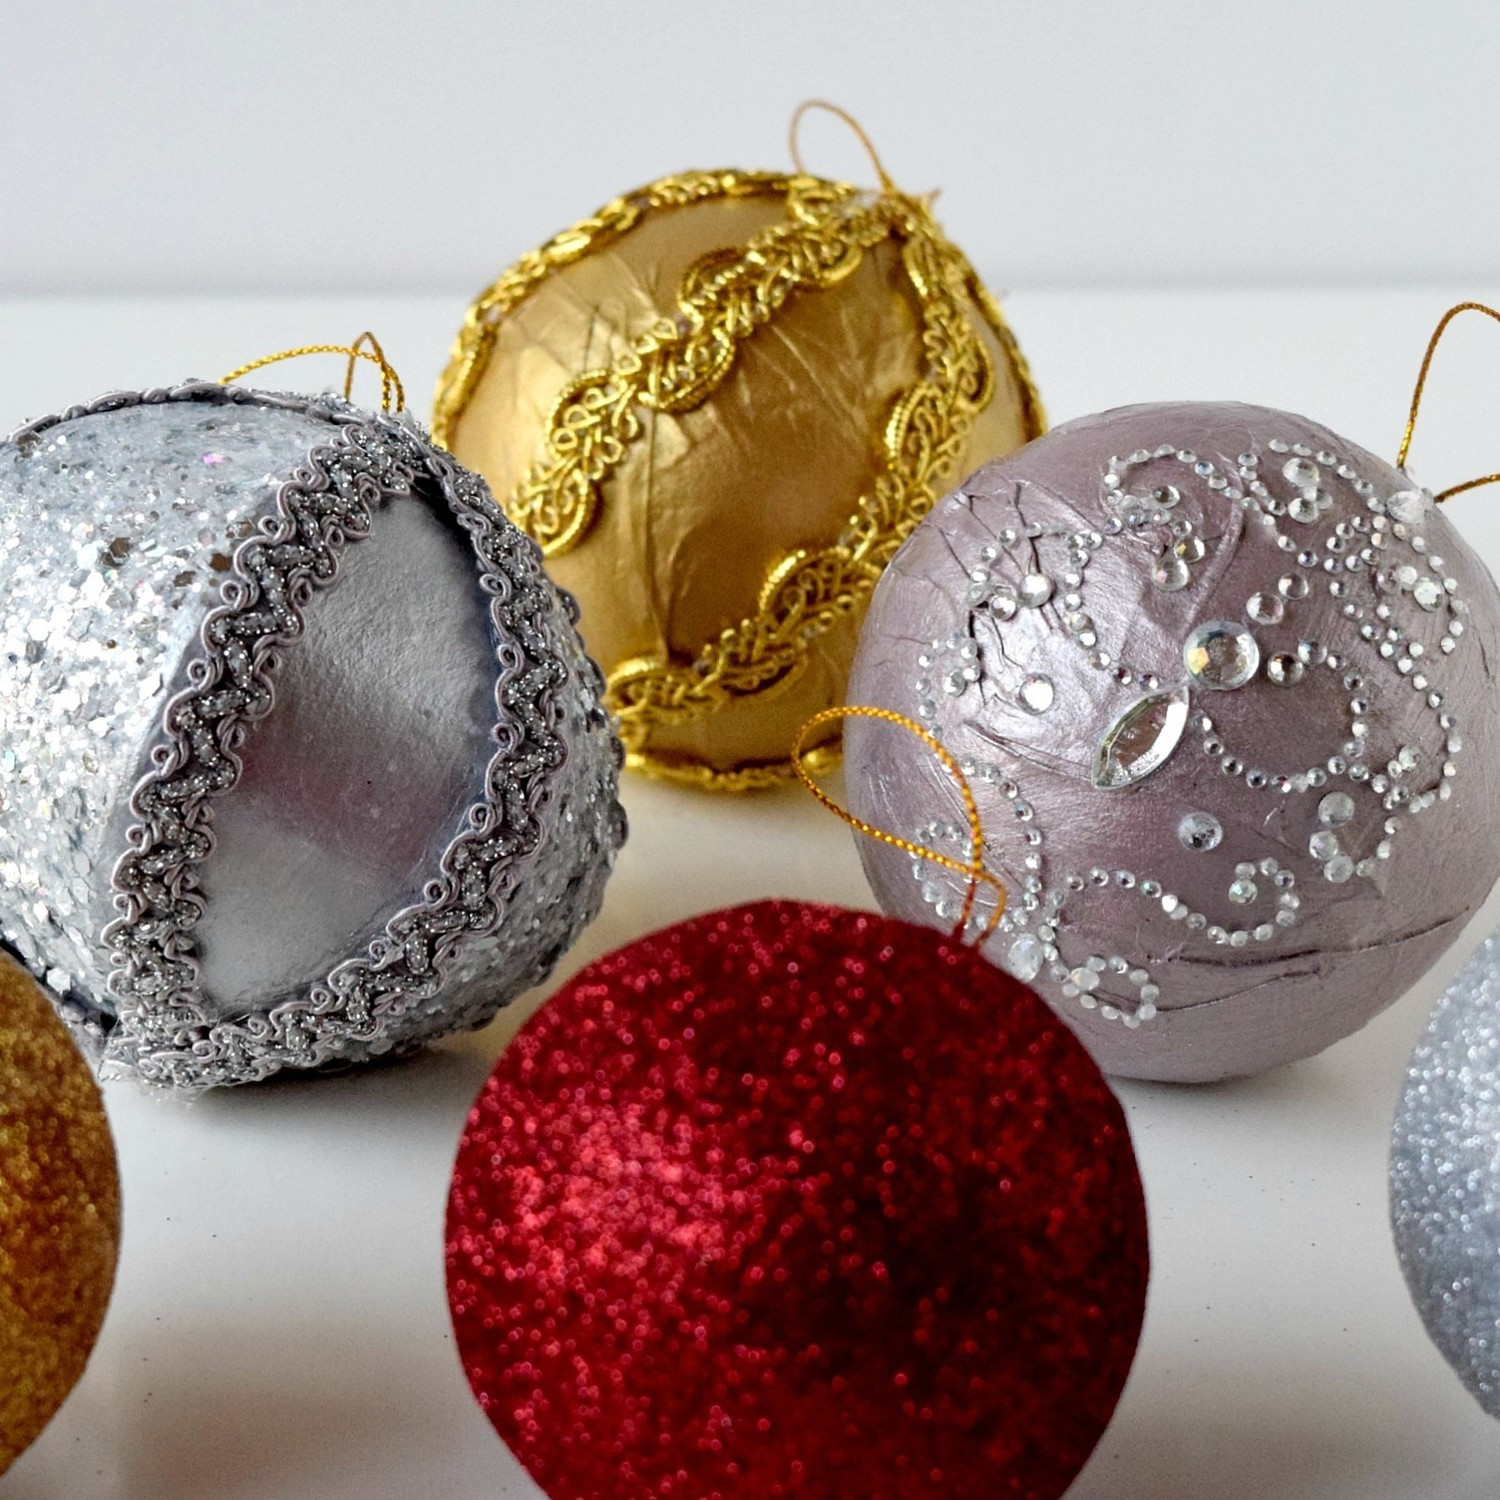 Best ideas about DIY Christmas Ornaments Martha Stewart
. Save or Pin 5 DIY Christmas Ornaments That Don t Break Now.